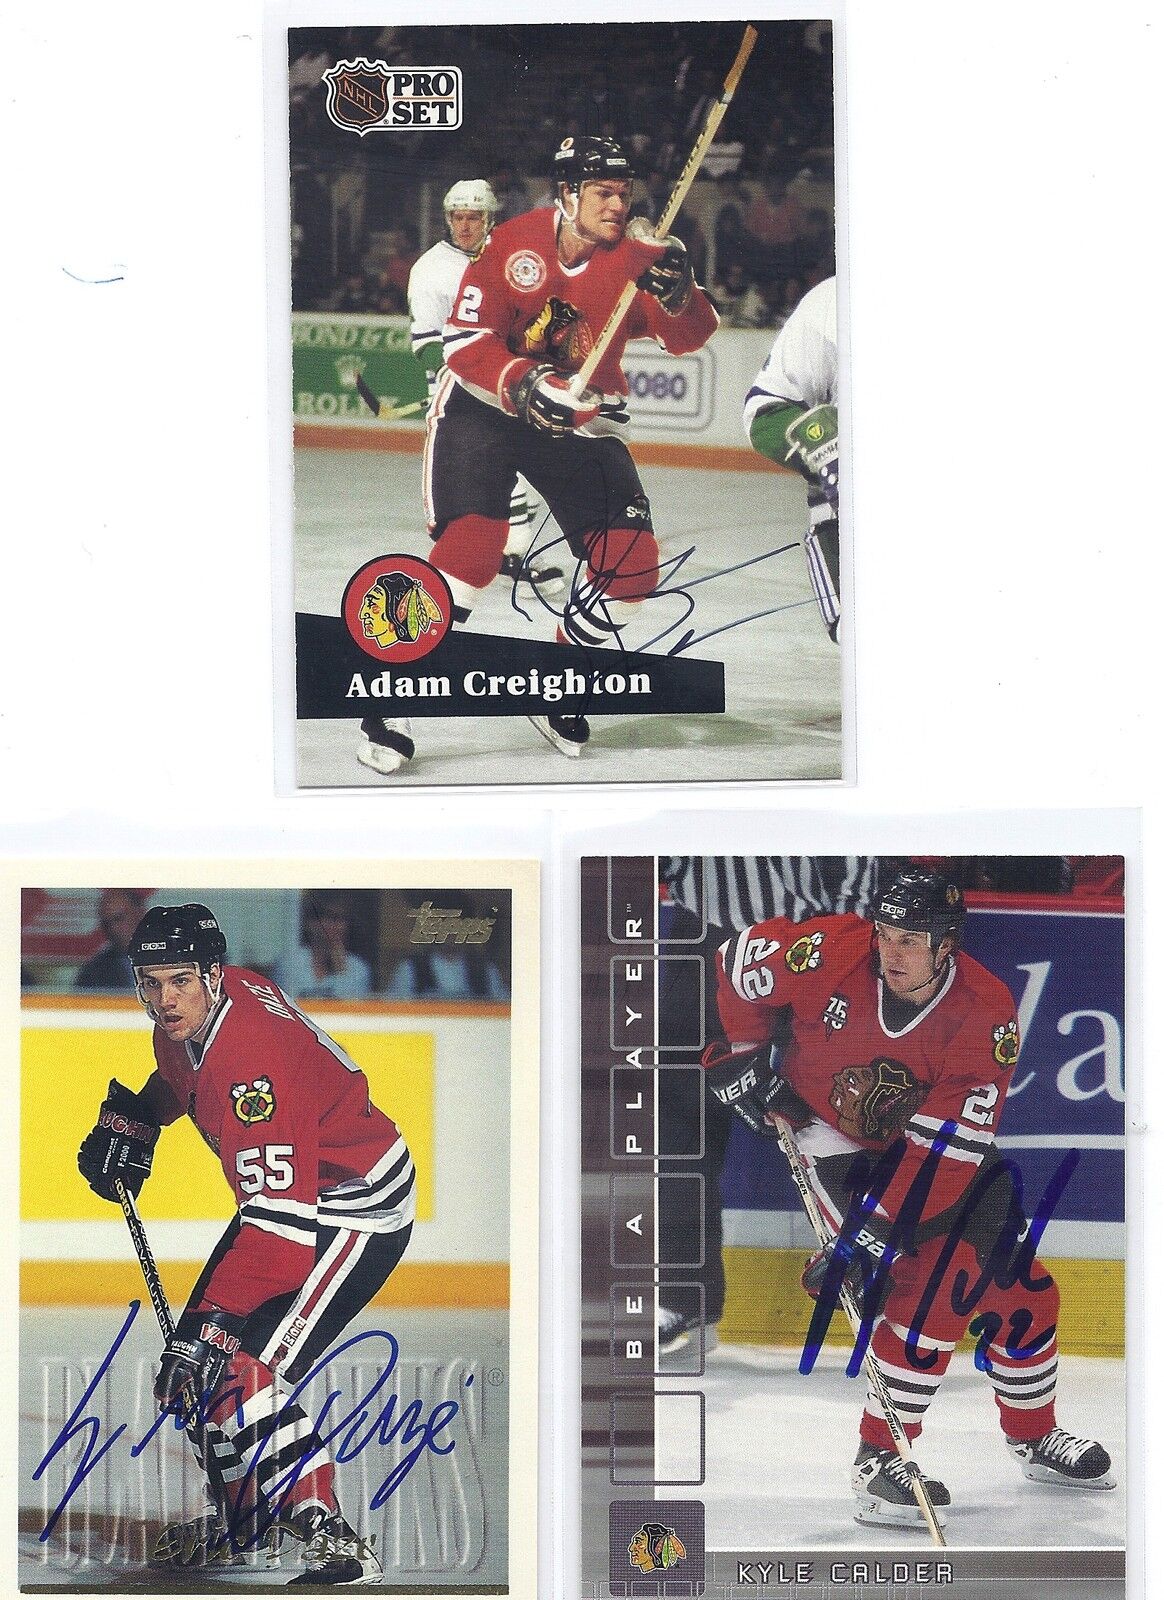 2001 ITG BAP #236 Kyle Calder Chicago Black Hawks Autographed Hockey Card 